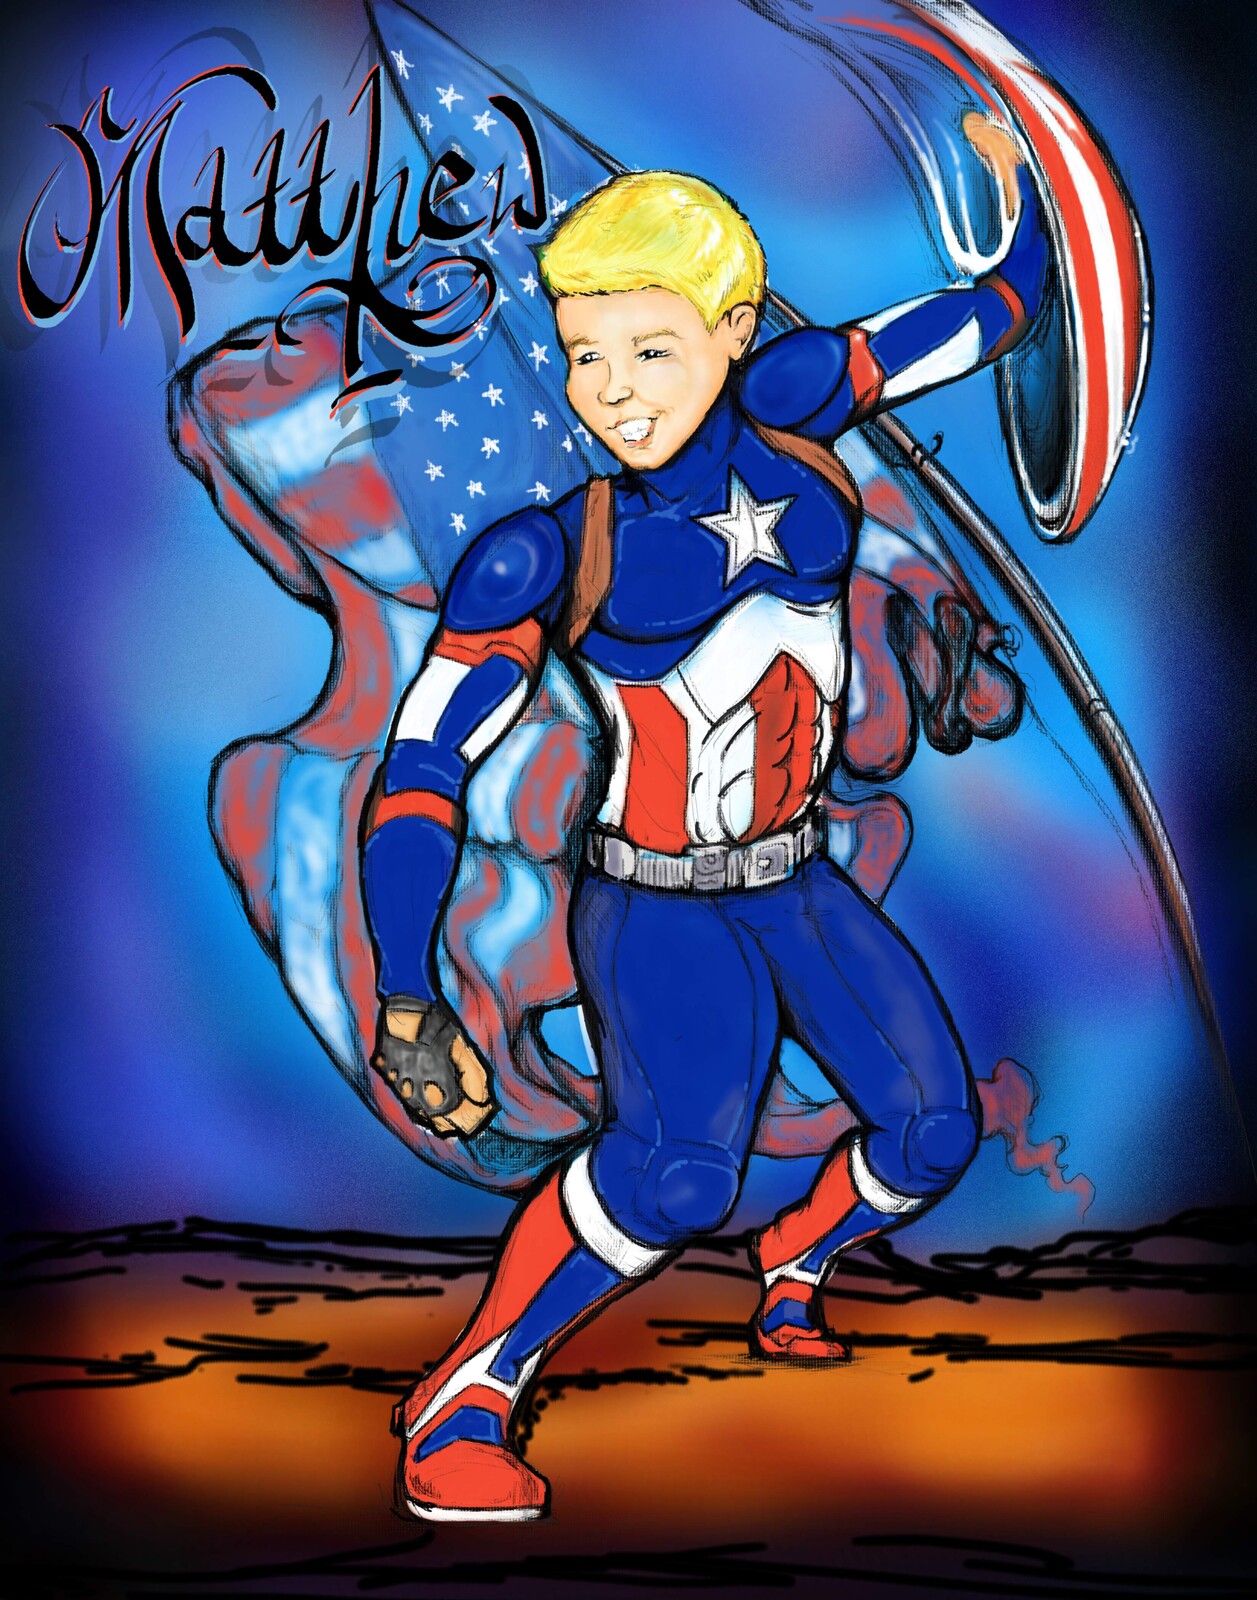 My Cousin Mathew as Captain America.